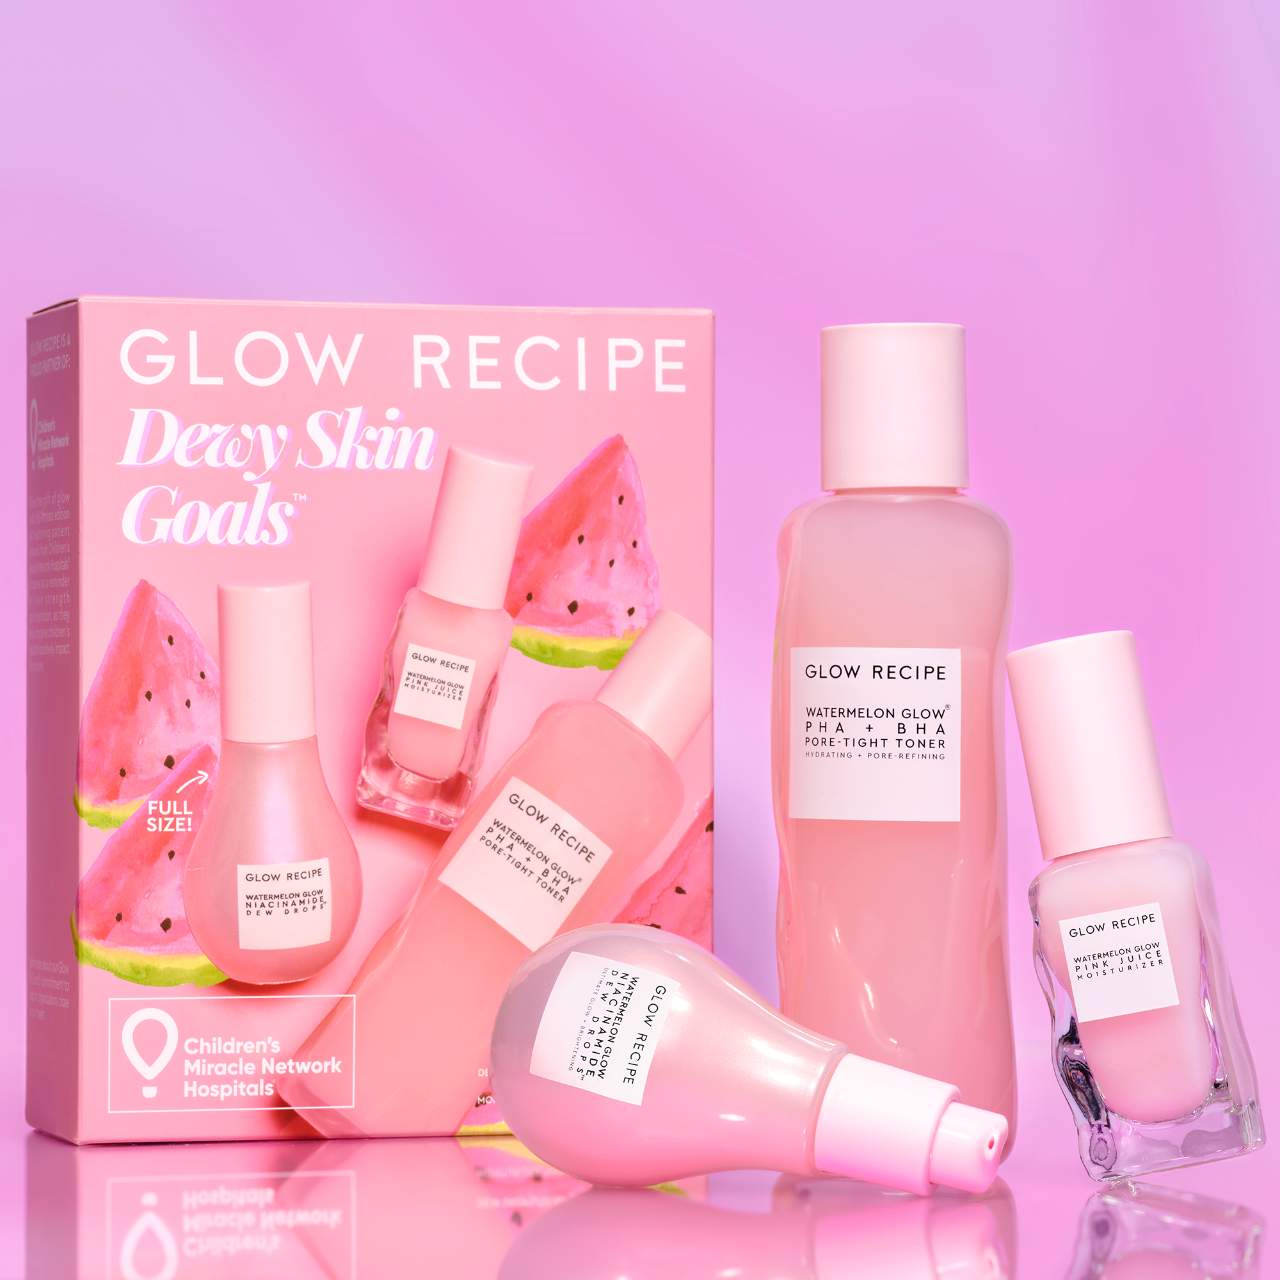 Glow Recipe - Dewy Skin Goals Kit